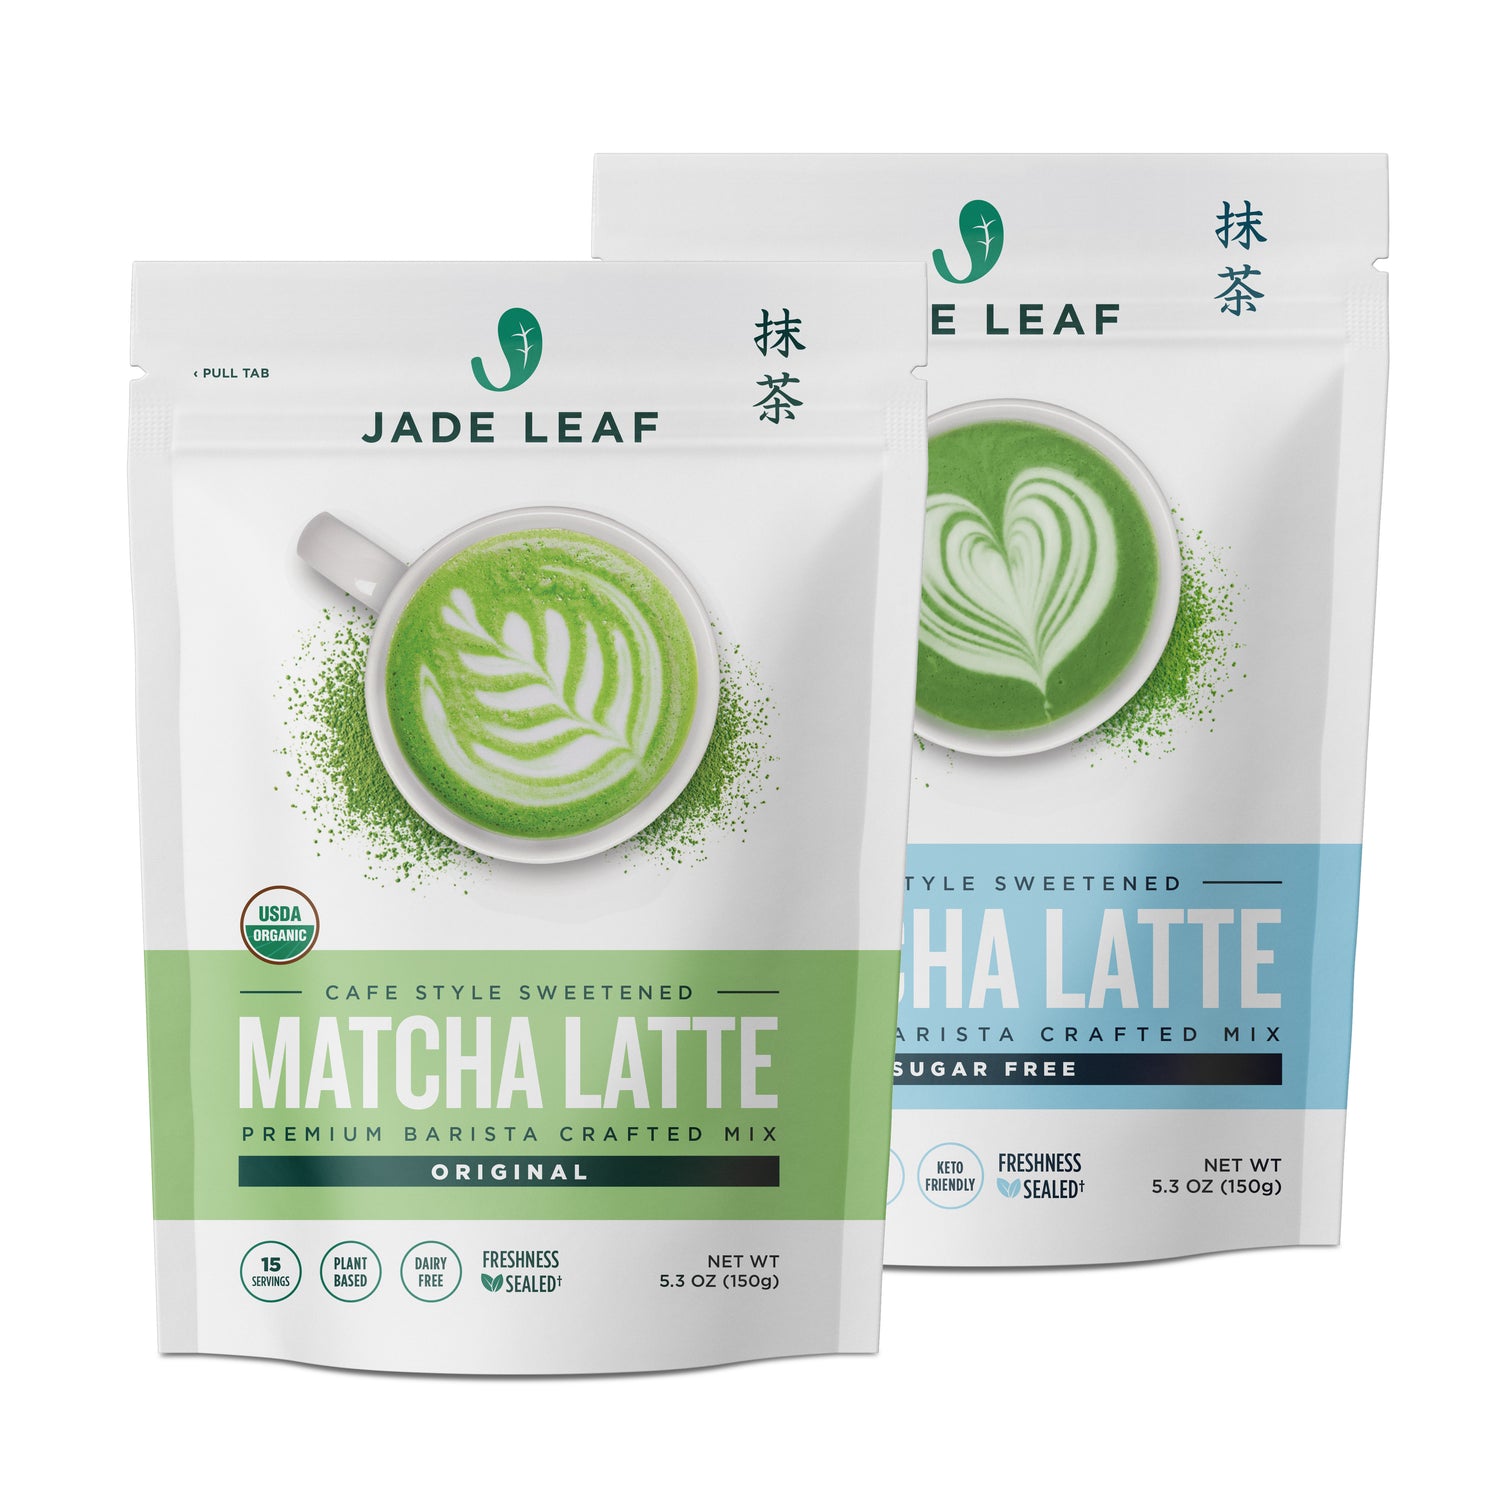 Jade Leaf - Traditional Matcha Starter Set – ML Aesthetic Clinic